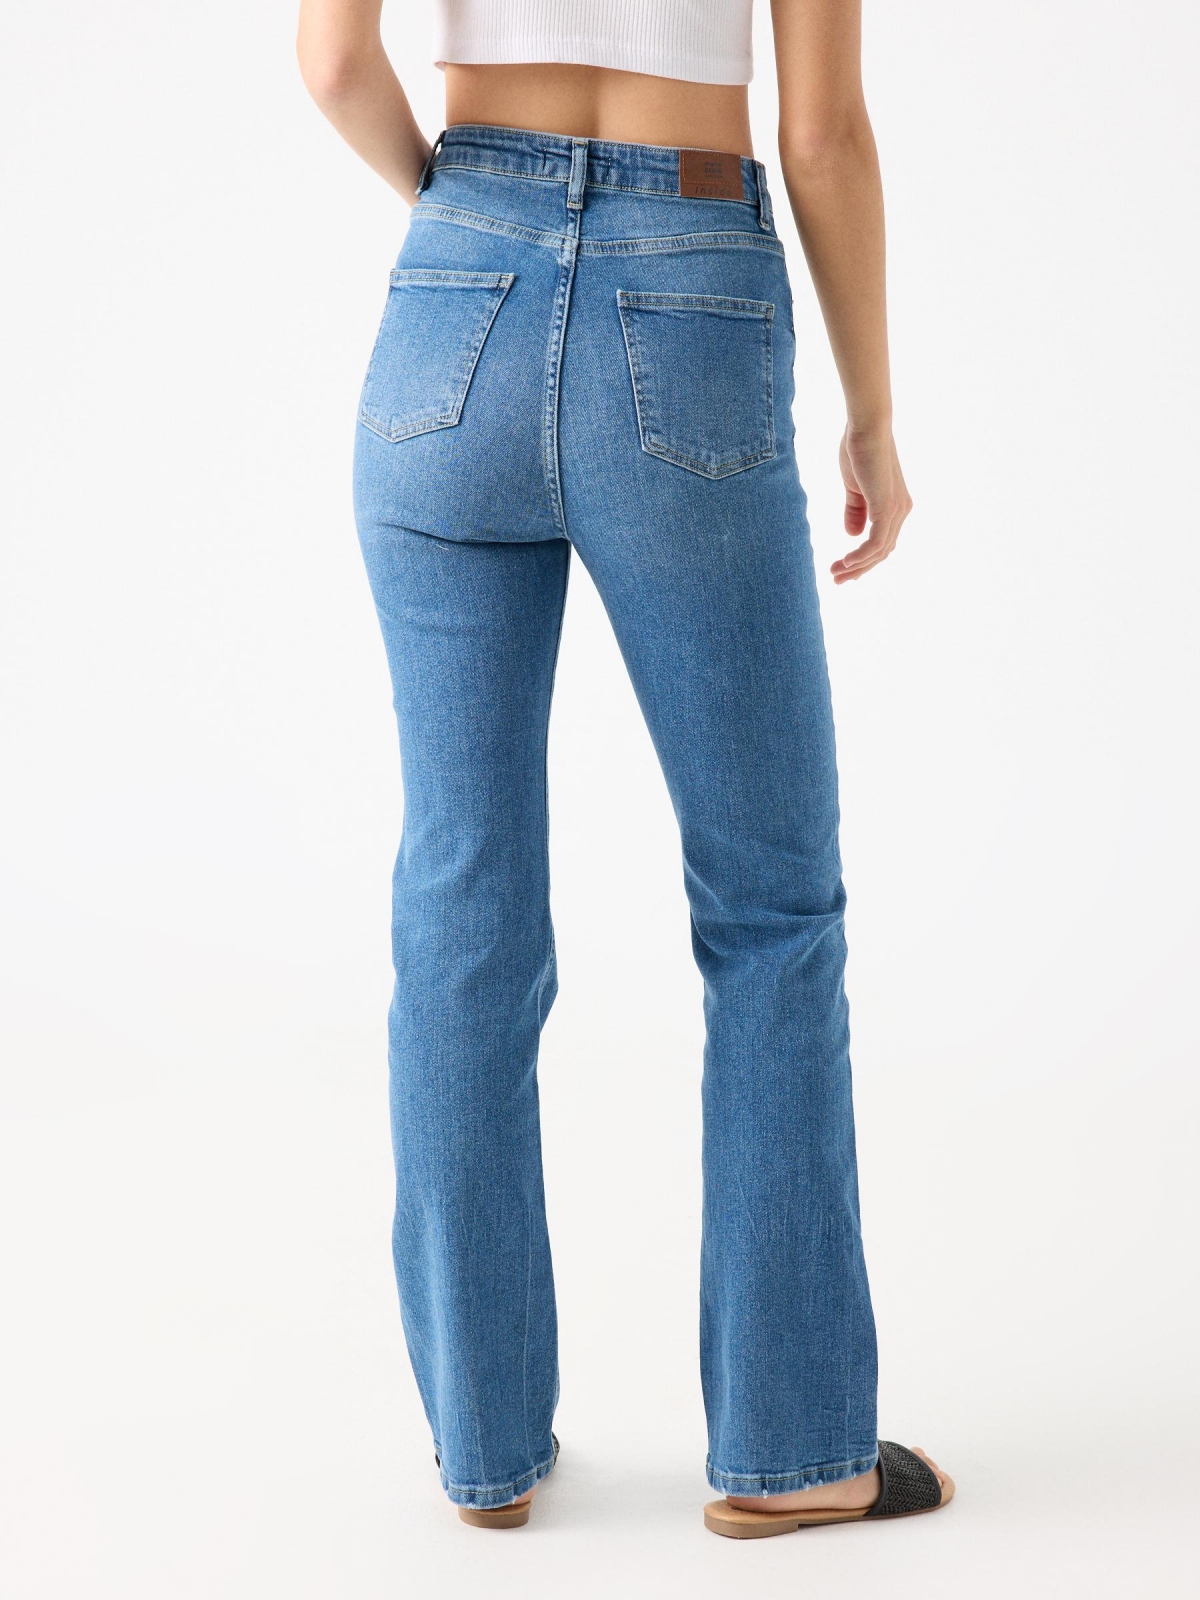 Jeans straight slim tiro alto azul vista media trasera